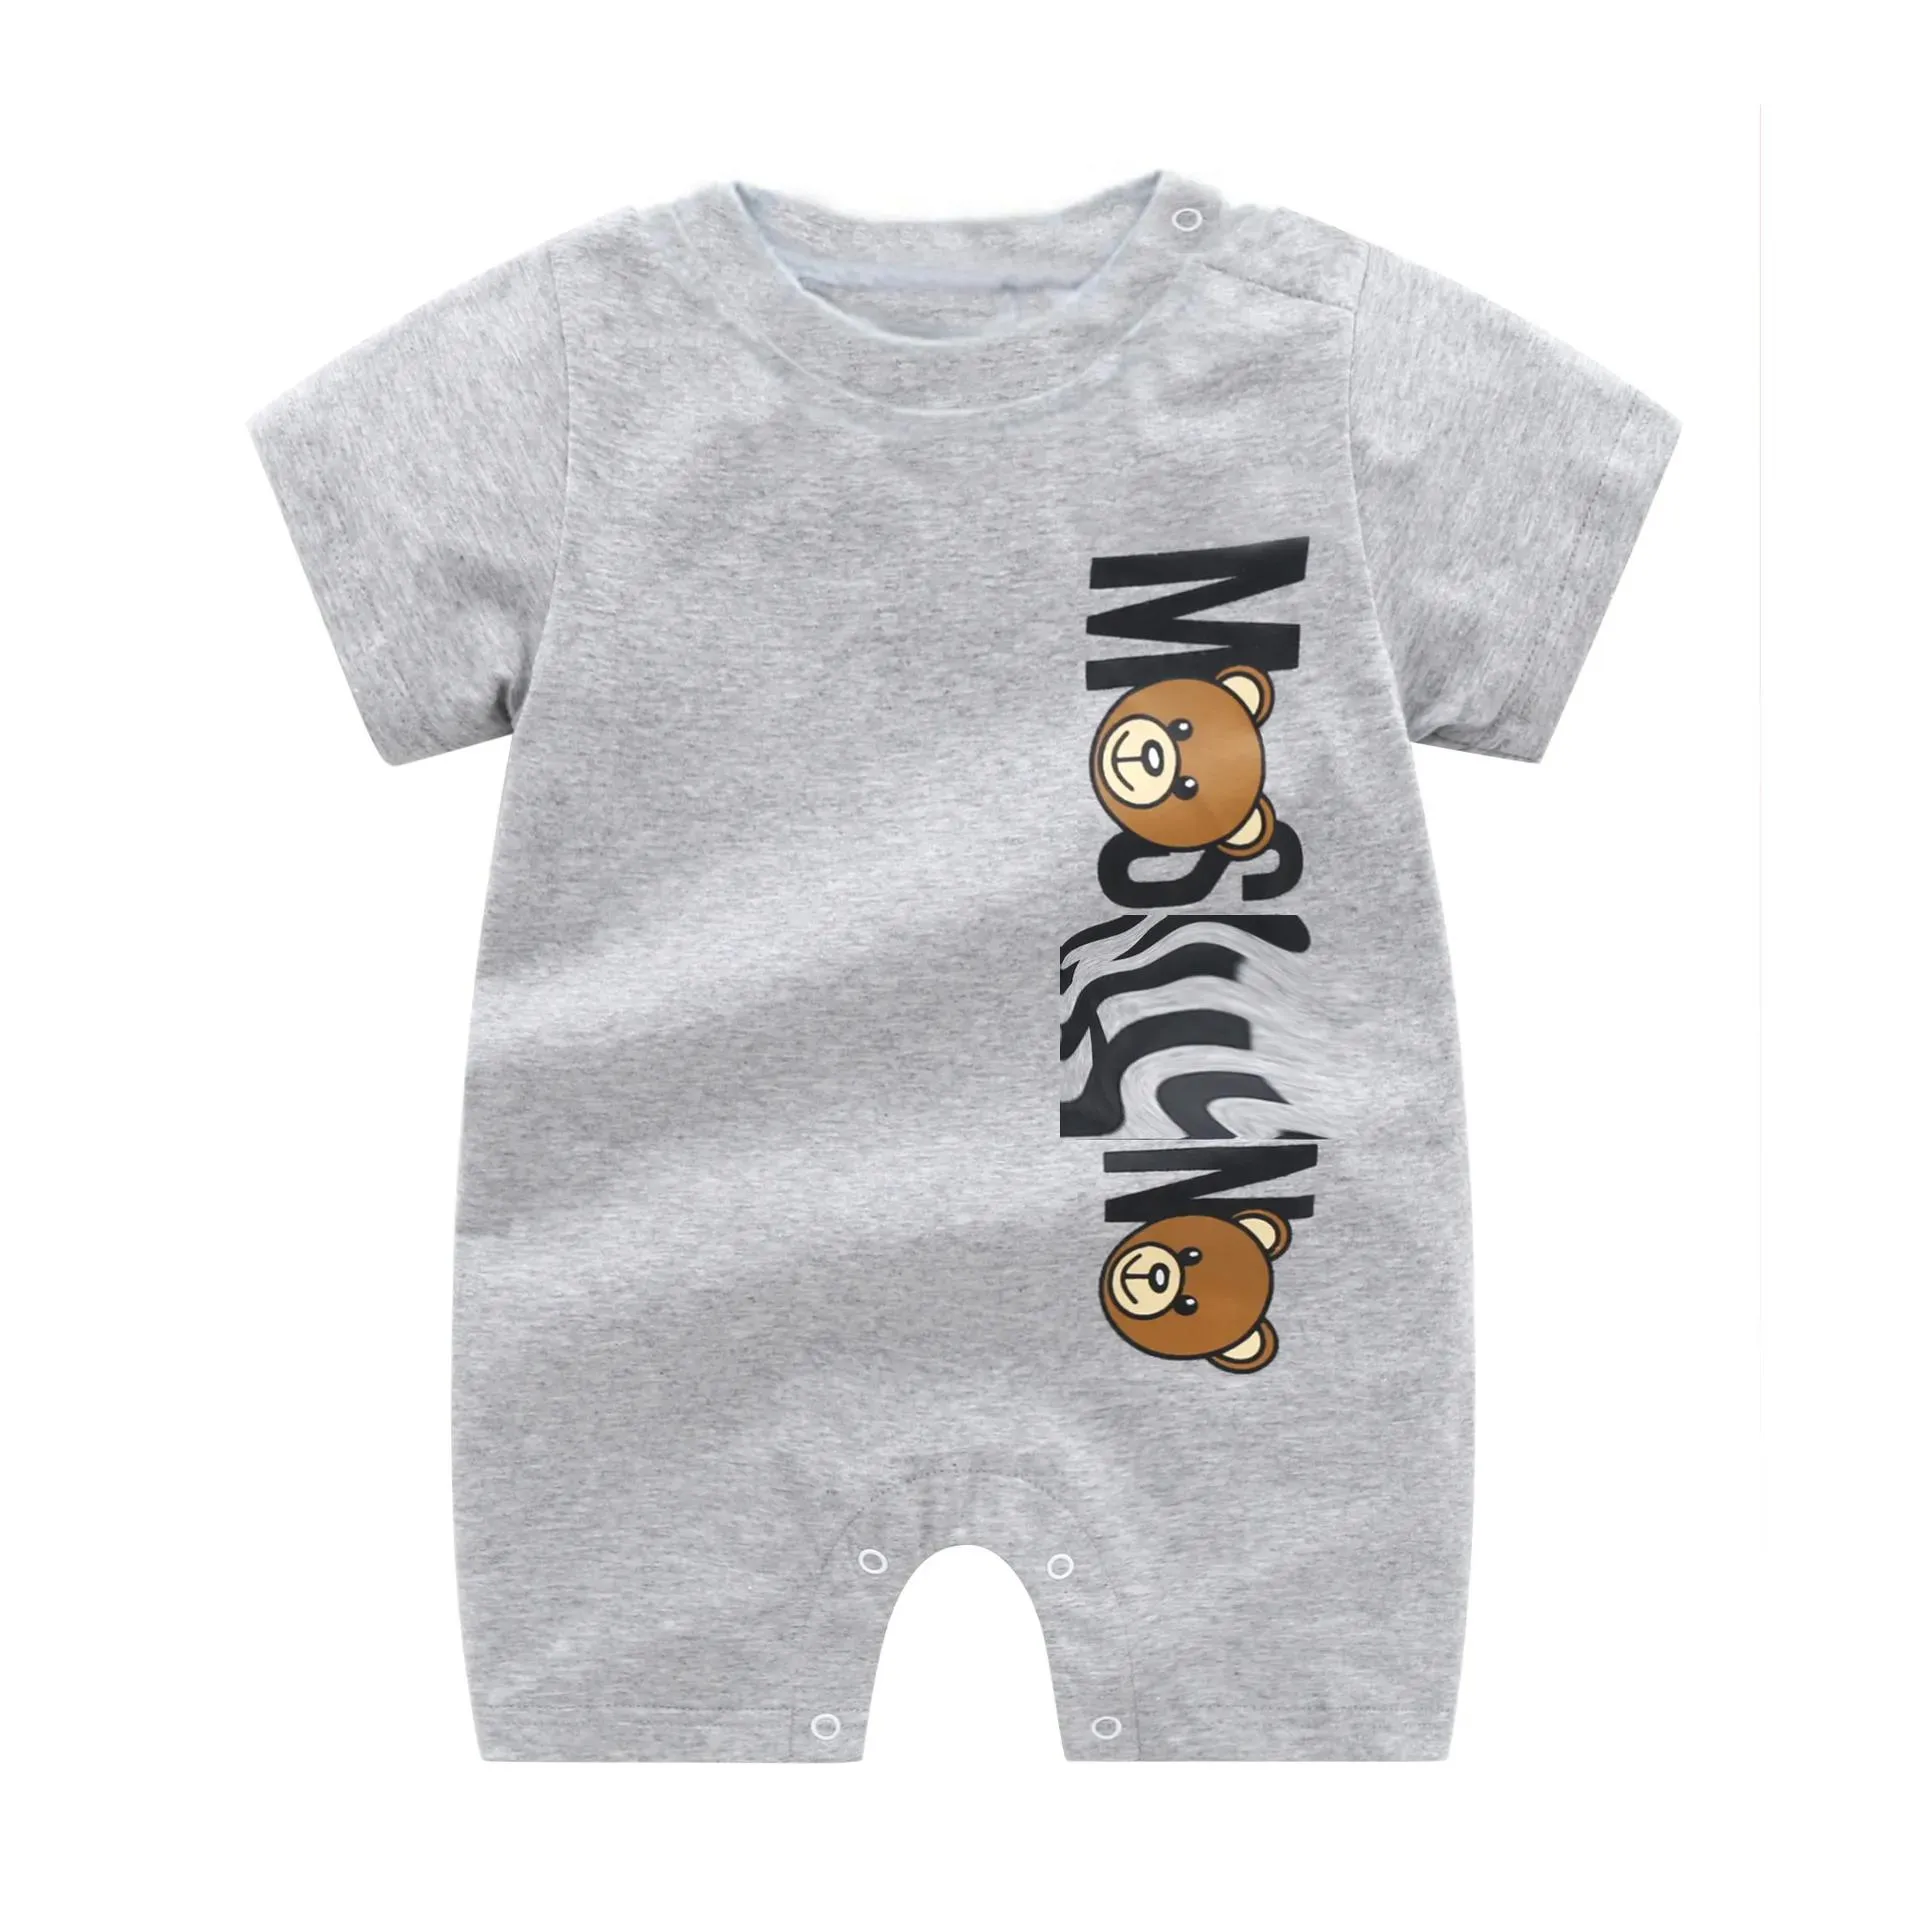 baby infant designers clothes born jumpsuit long sleeve cotton pajamas 0-24 months rompers designers clothes